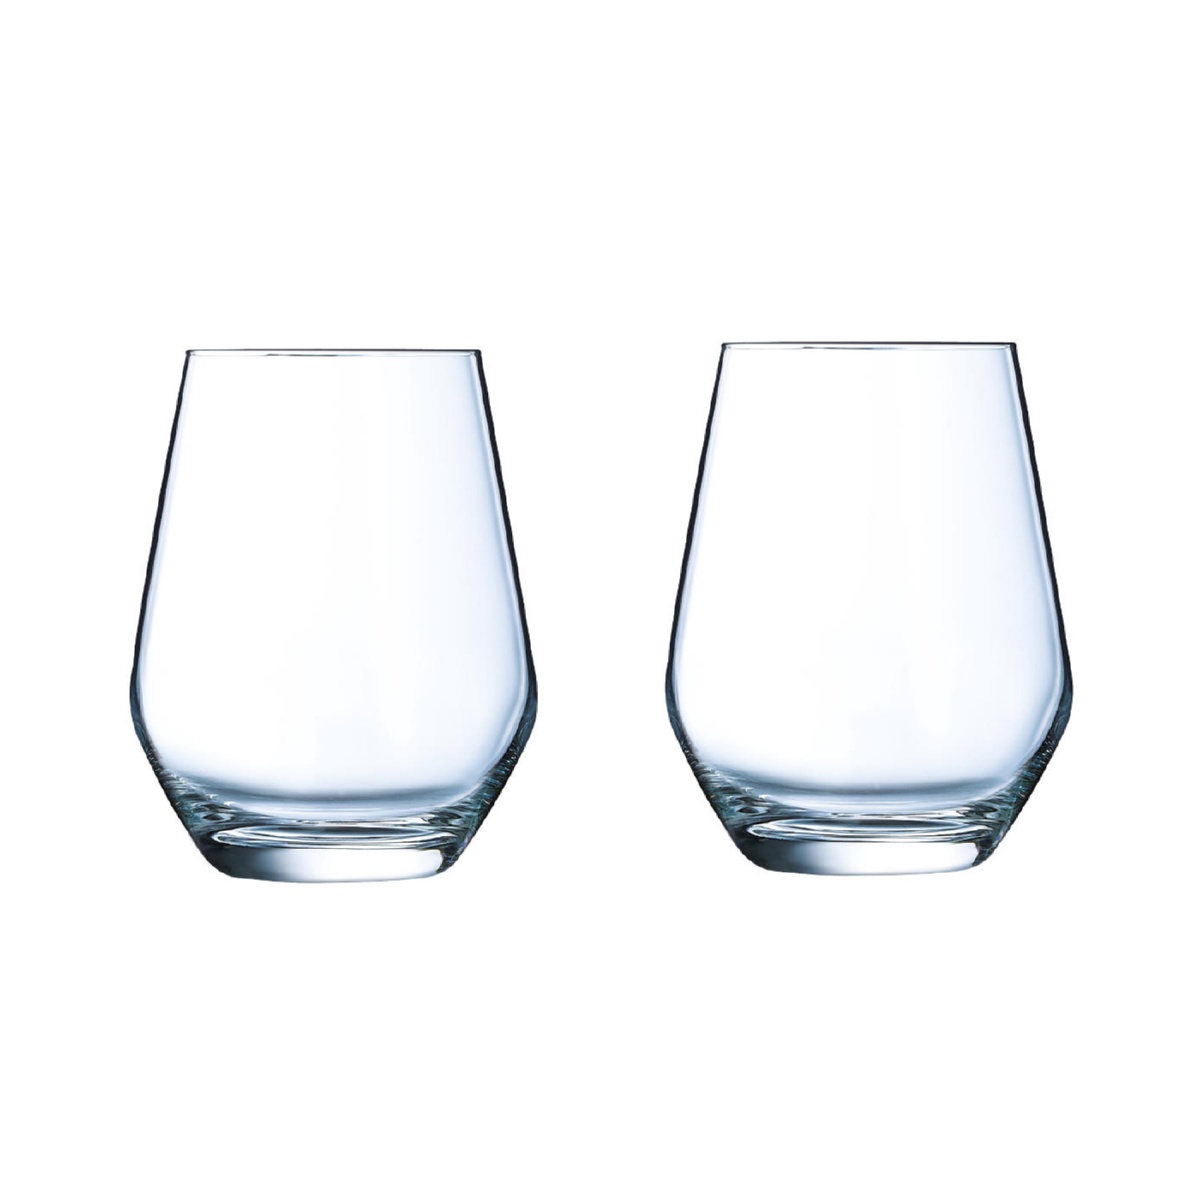 Набор стаканов Gipfel Vina Juliette 51131 2 предмета набор фужеров gipfel vina juliette 51129 2 предмета